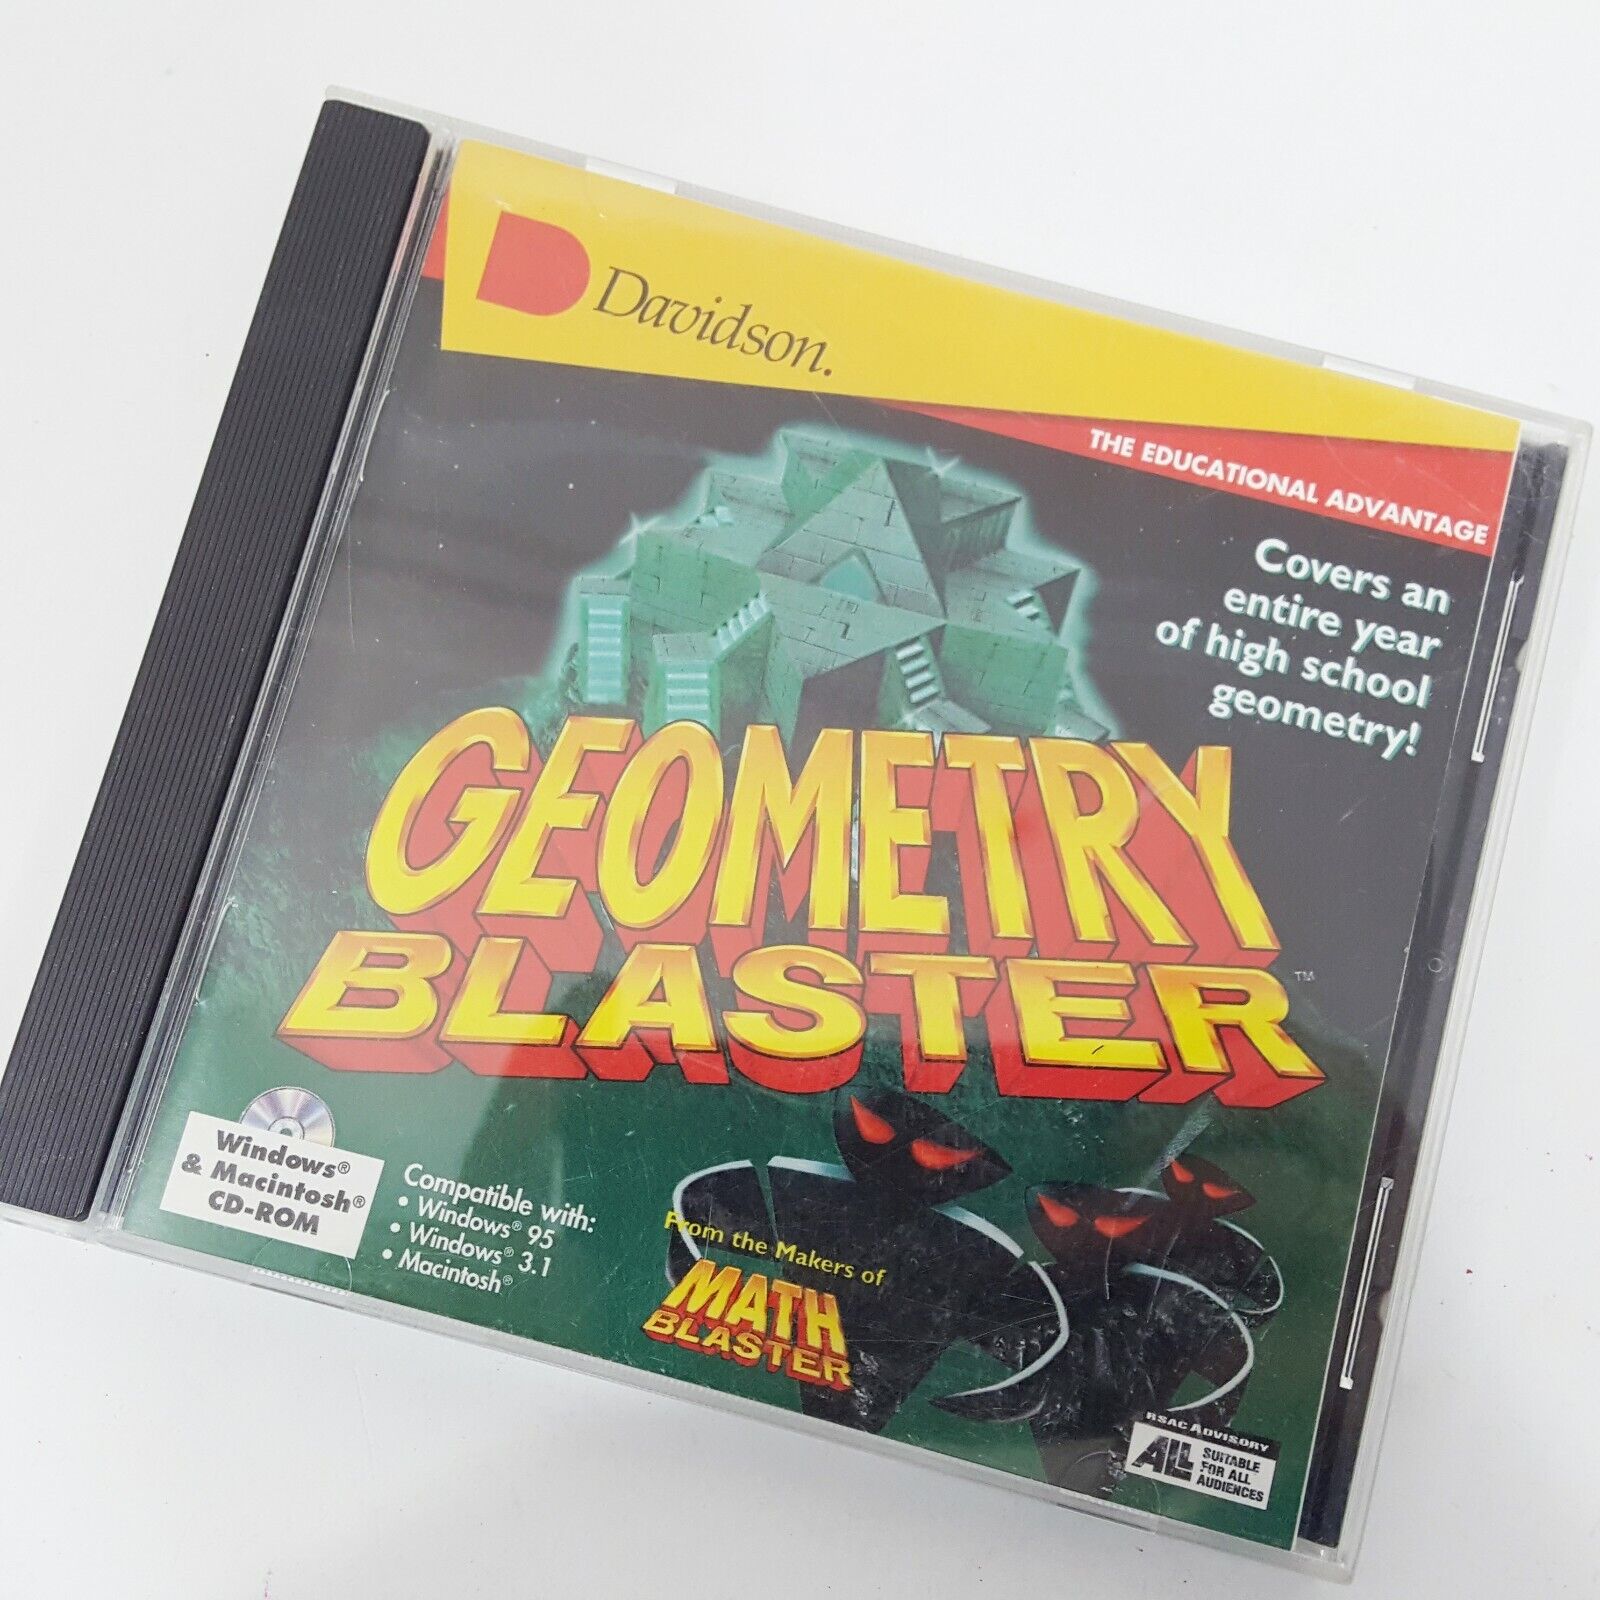 Davidson Geometry Blaster The Math Educational Advantage PC CD Rom Computer Game